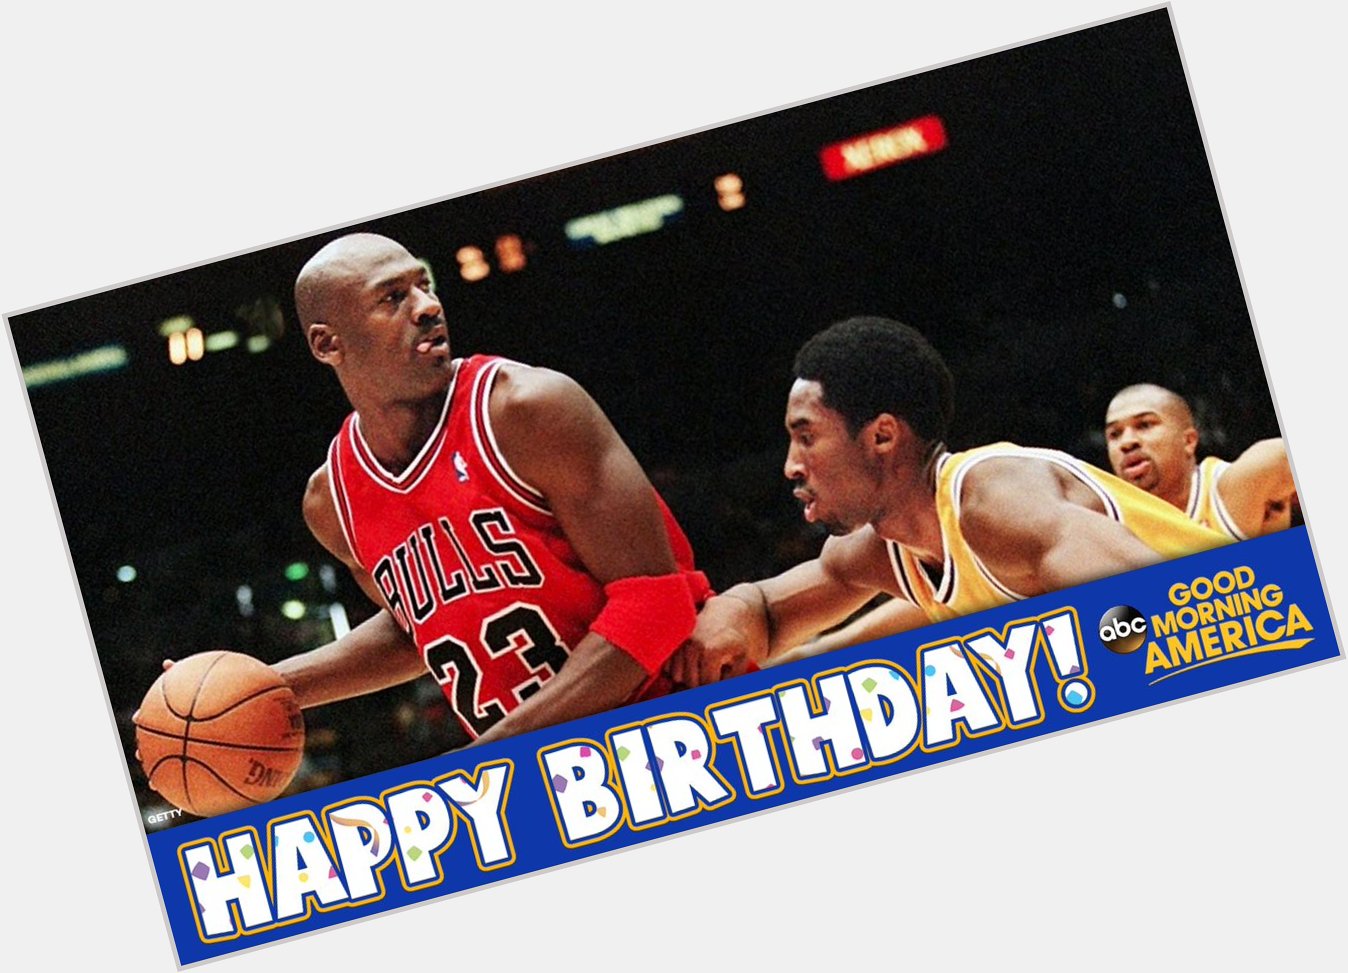 Happy birthday, Michael Jordan!   